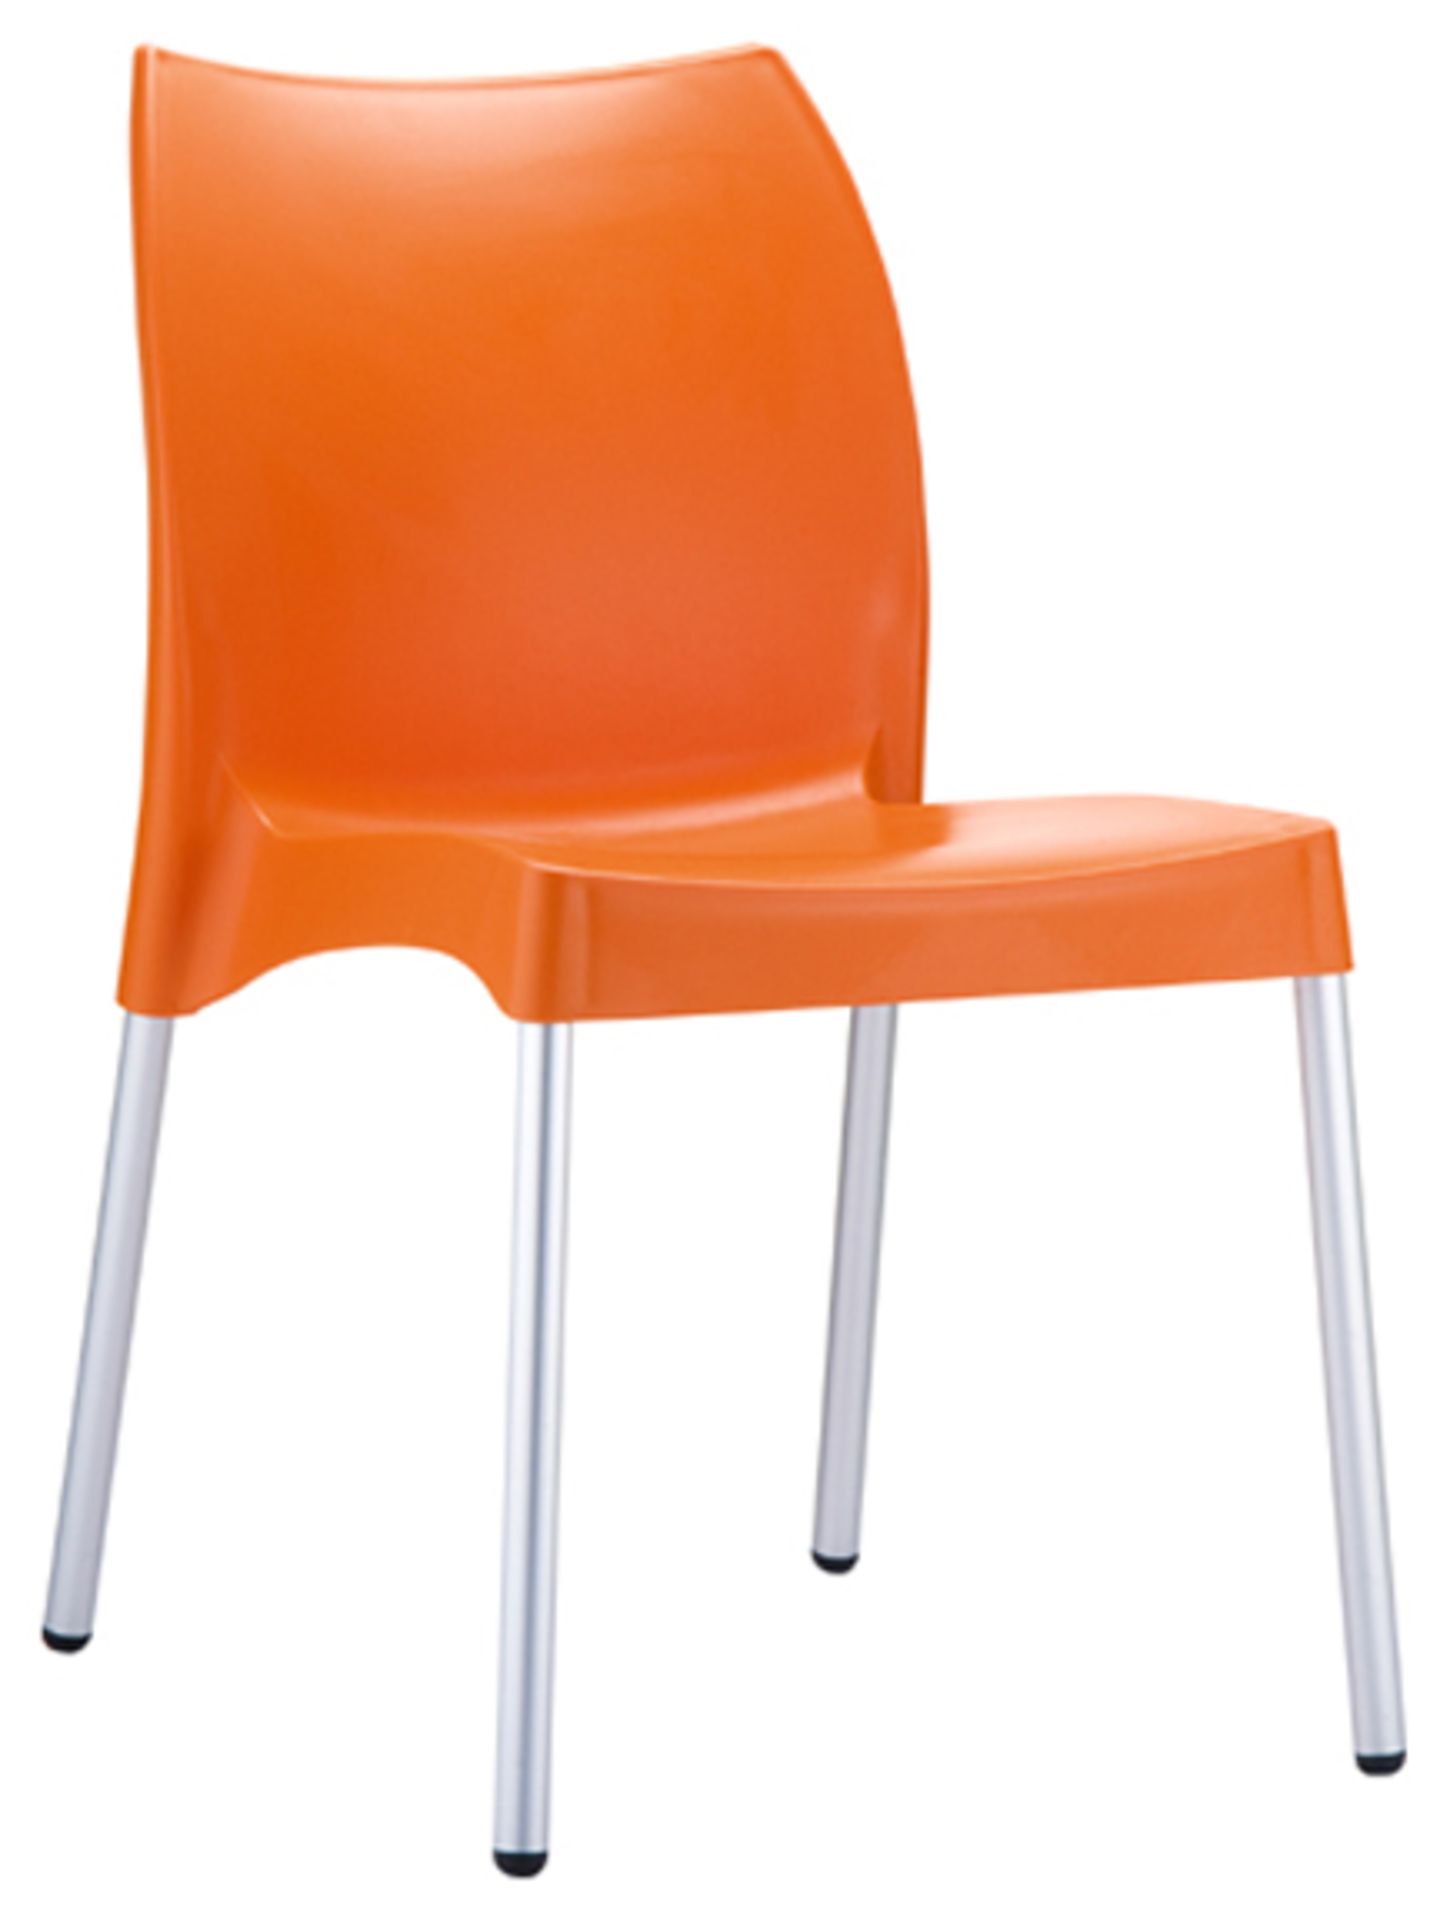 Domenica Arm Chair - orange, 16 boxes w/ 4 each, 64 total